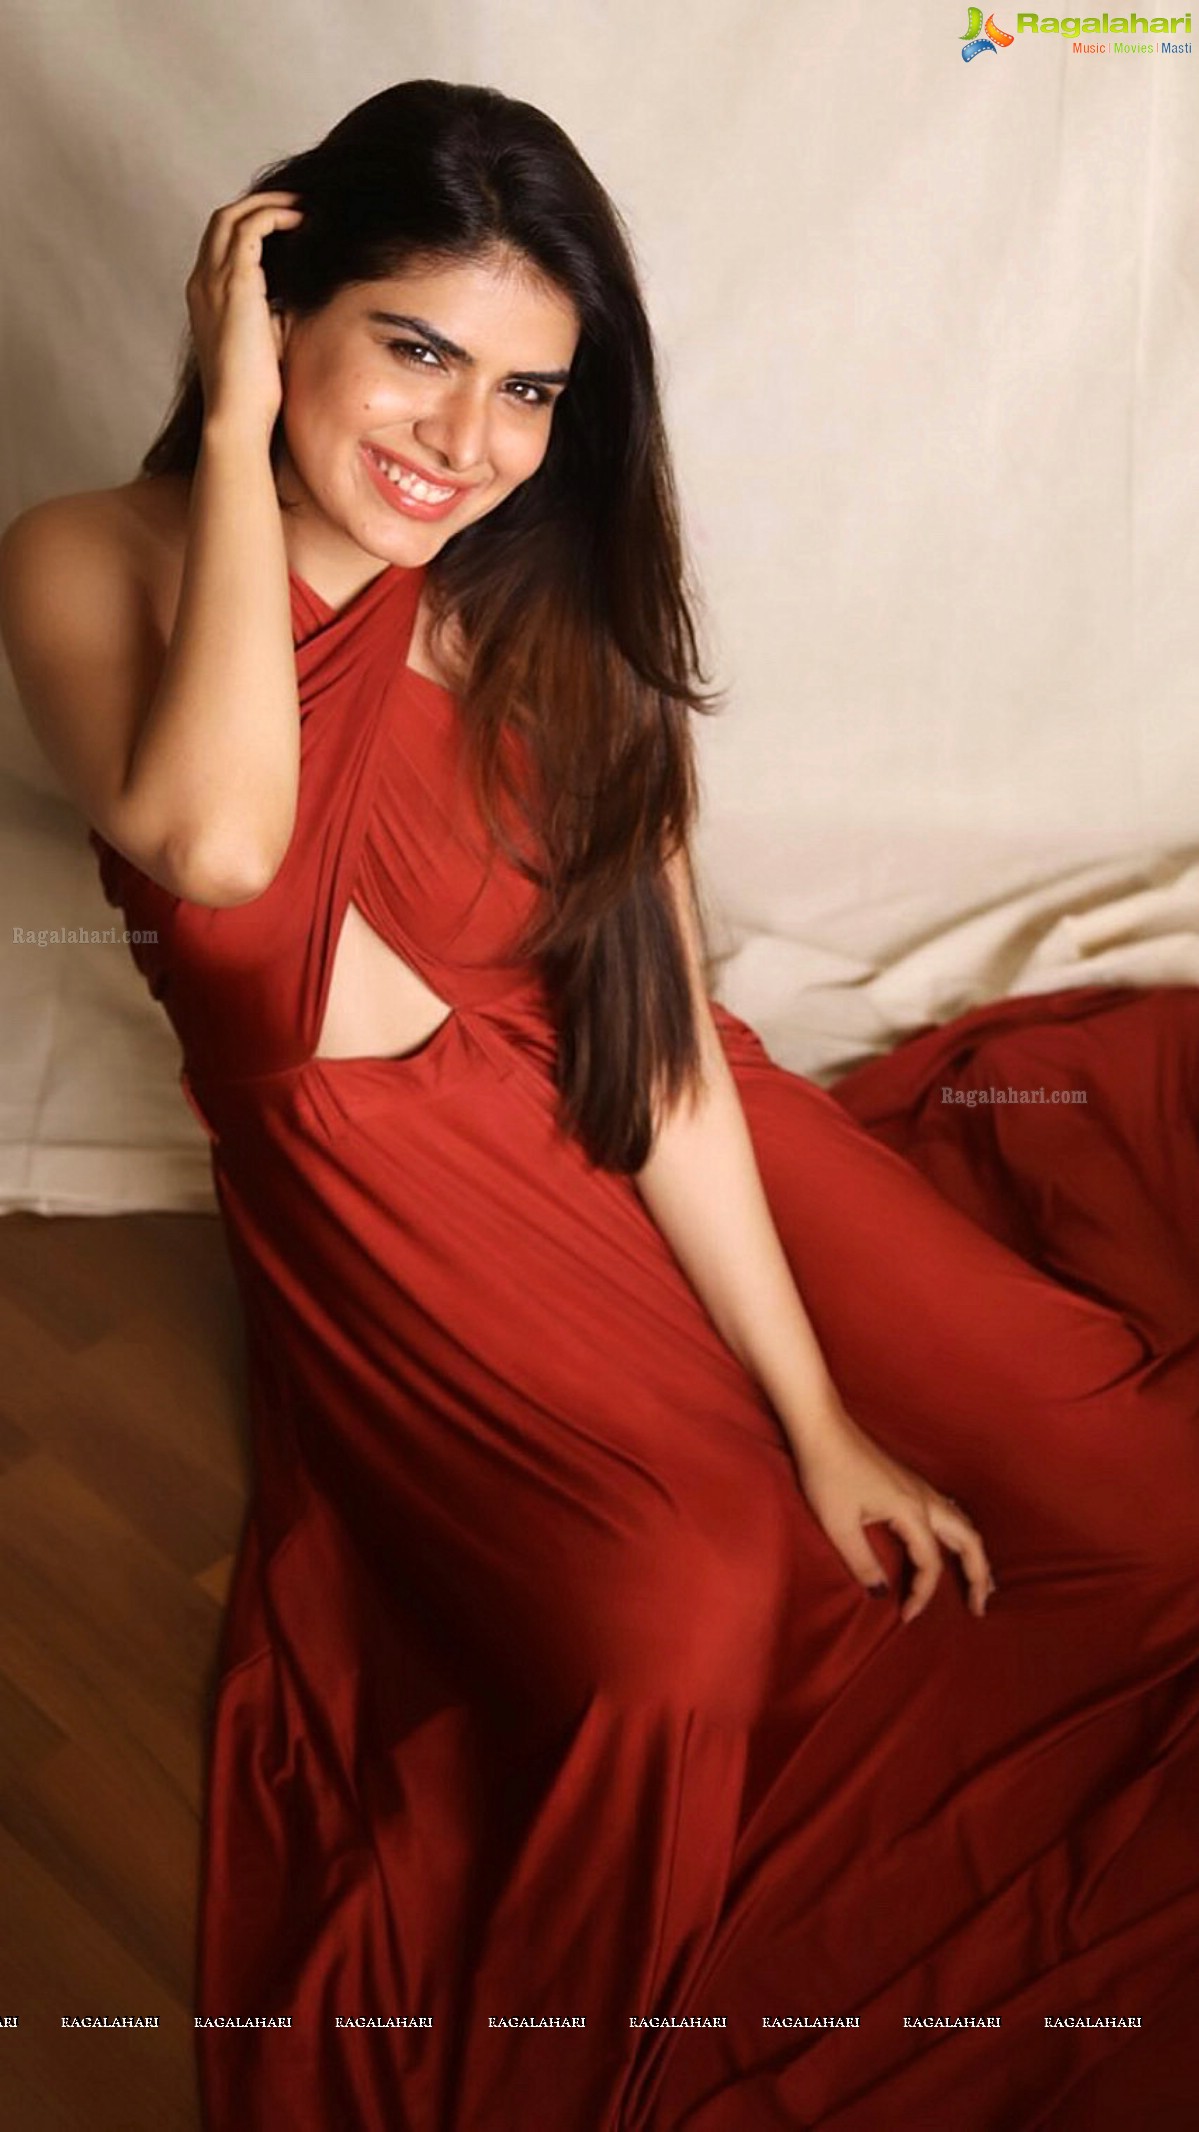 Twiinkle Saaj in Halter Neck Red Dress Photo Shoot